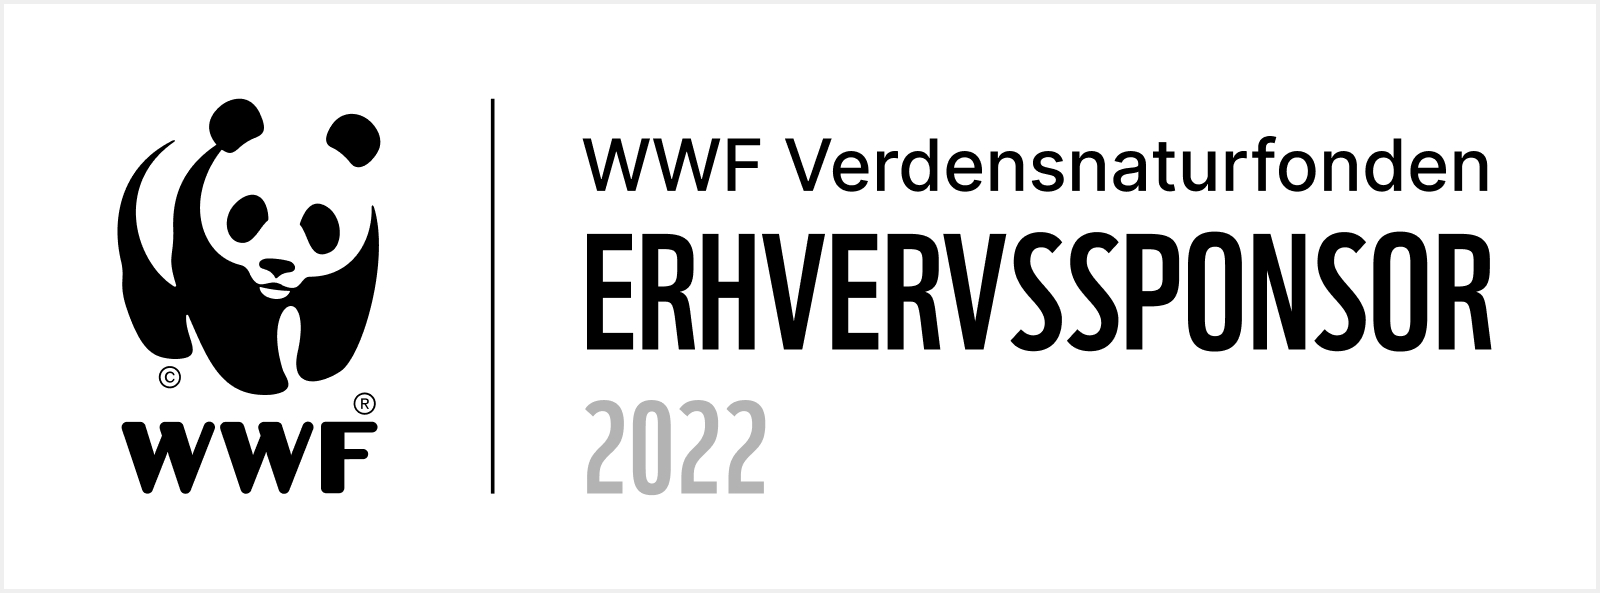 Feriecenter Slettestrand er WWF Verdensnaturfonden Erhvervssponsor 2022